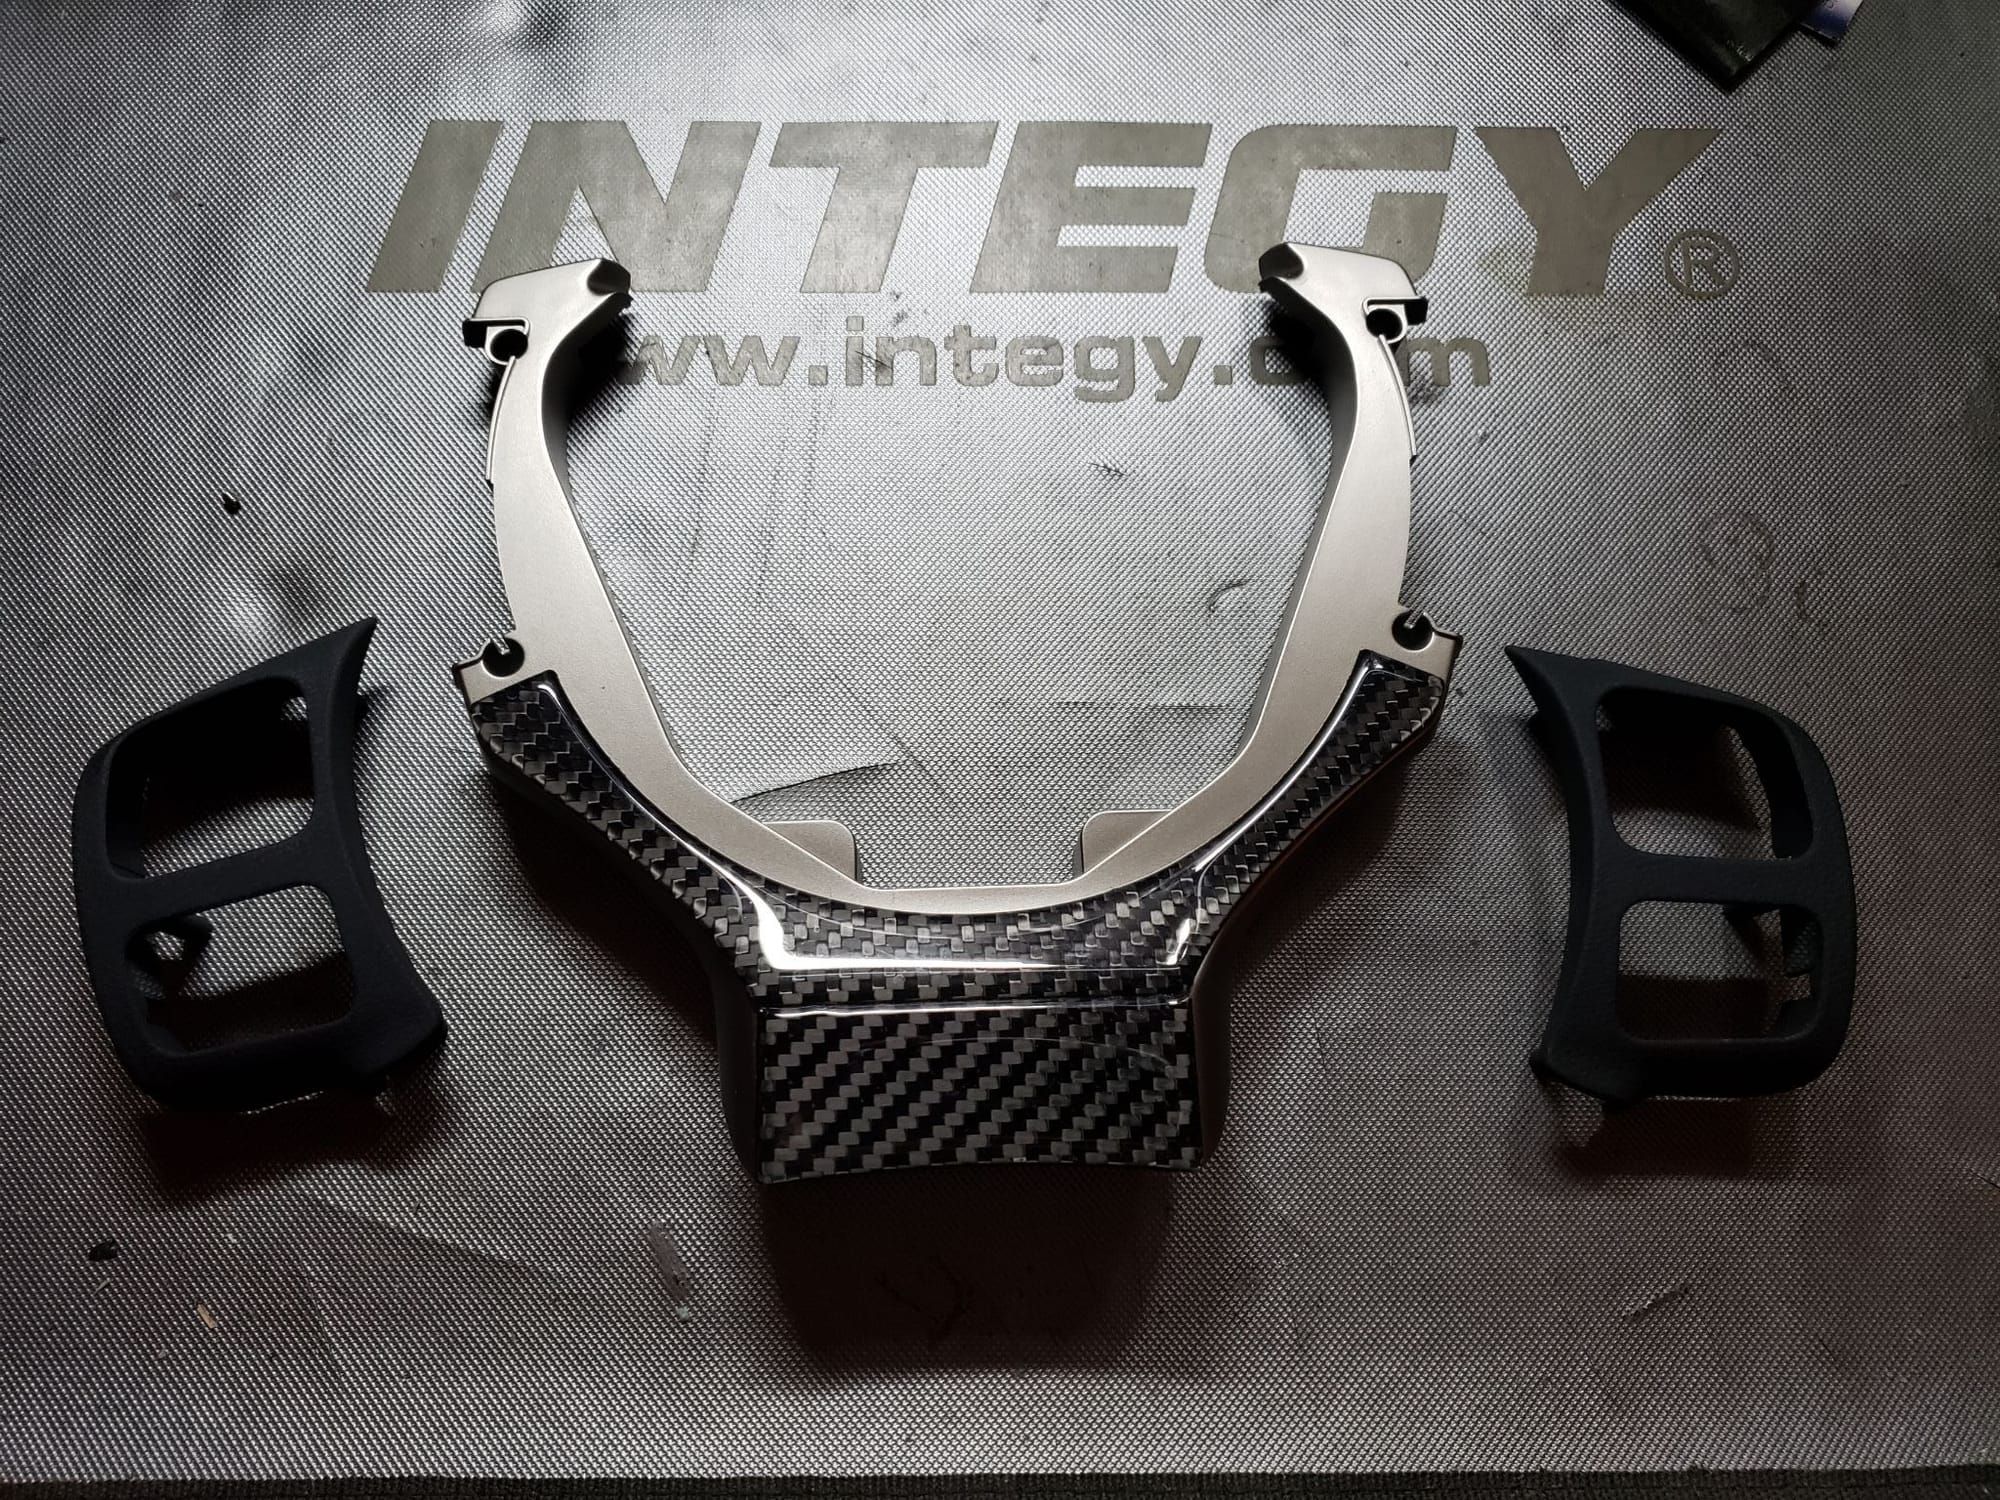 Interior/Upholstery - FS: OEM Lexus RC-F Steering Wheel 2015 w/ F Emblem and Center Garnish w/ Carbon Fiber - Used - 2015 to 2019 Lexus RC F - Dothan, AL 36301, United States